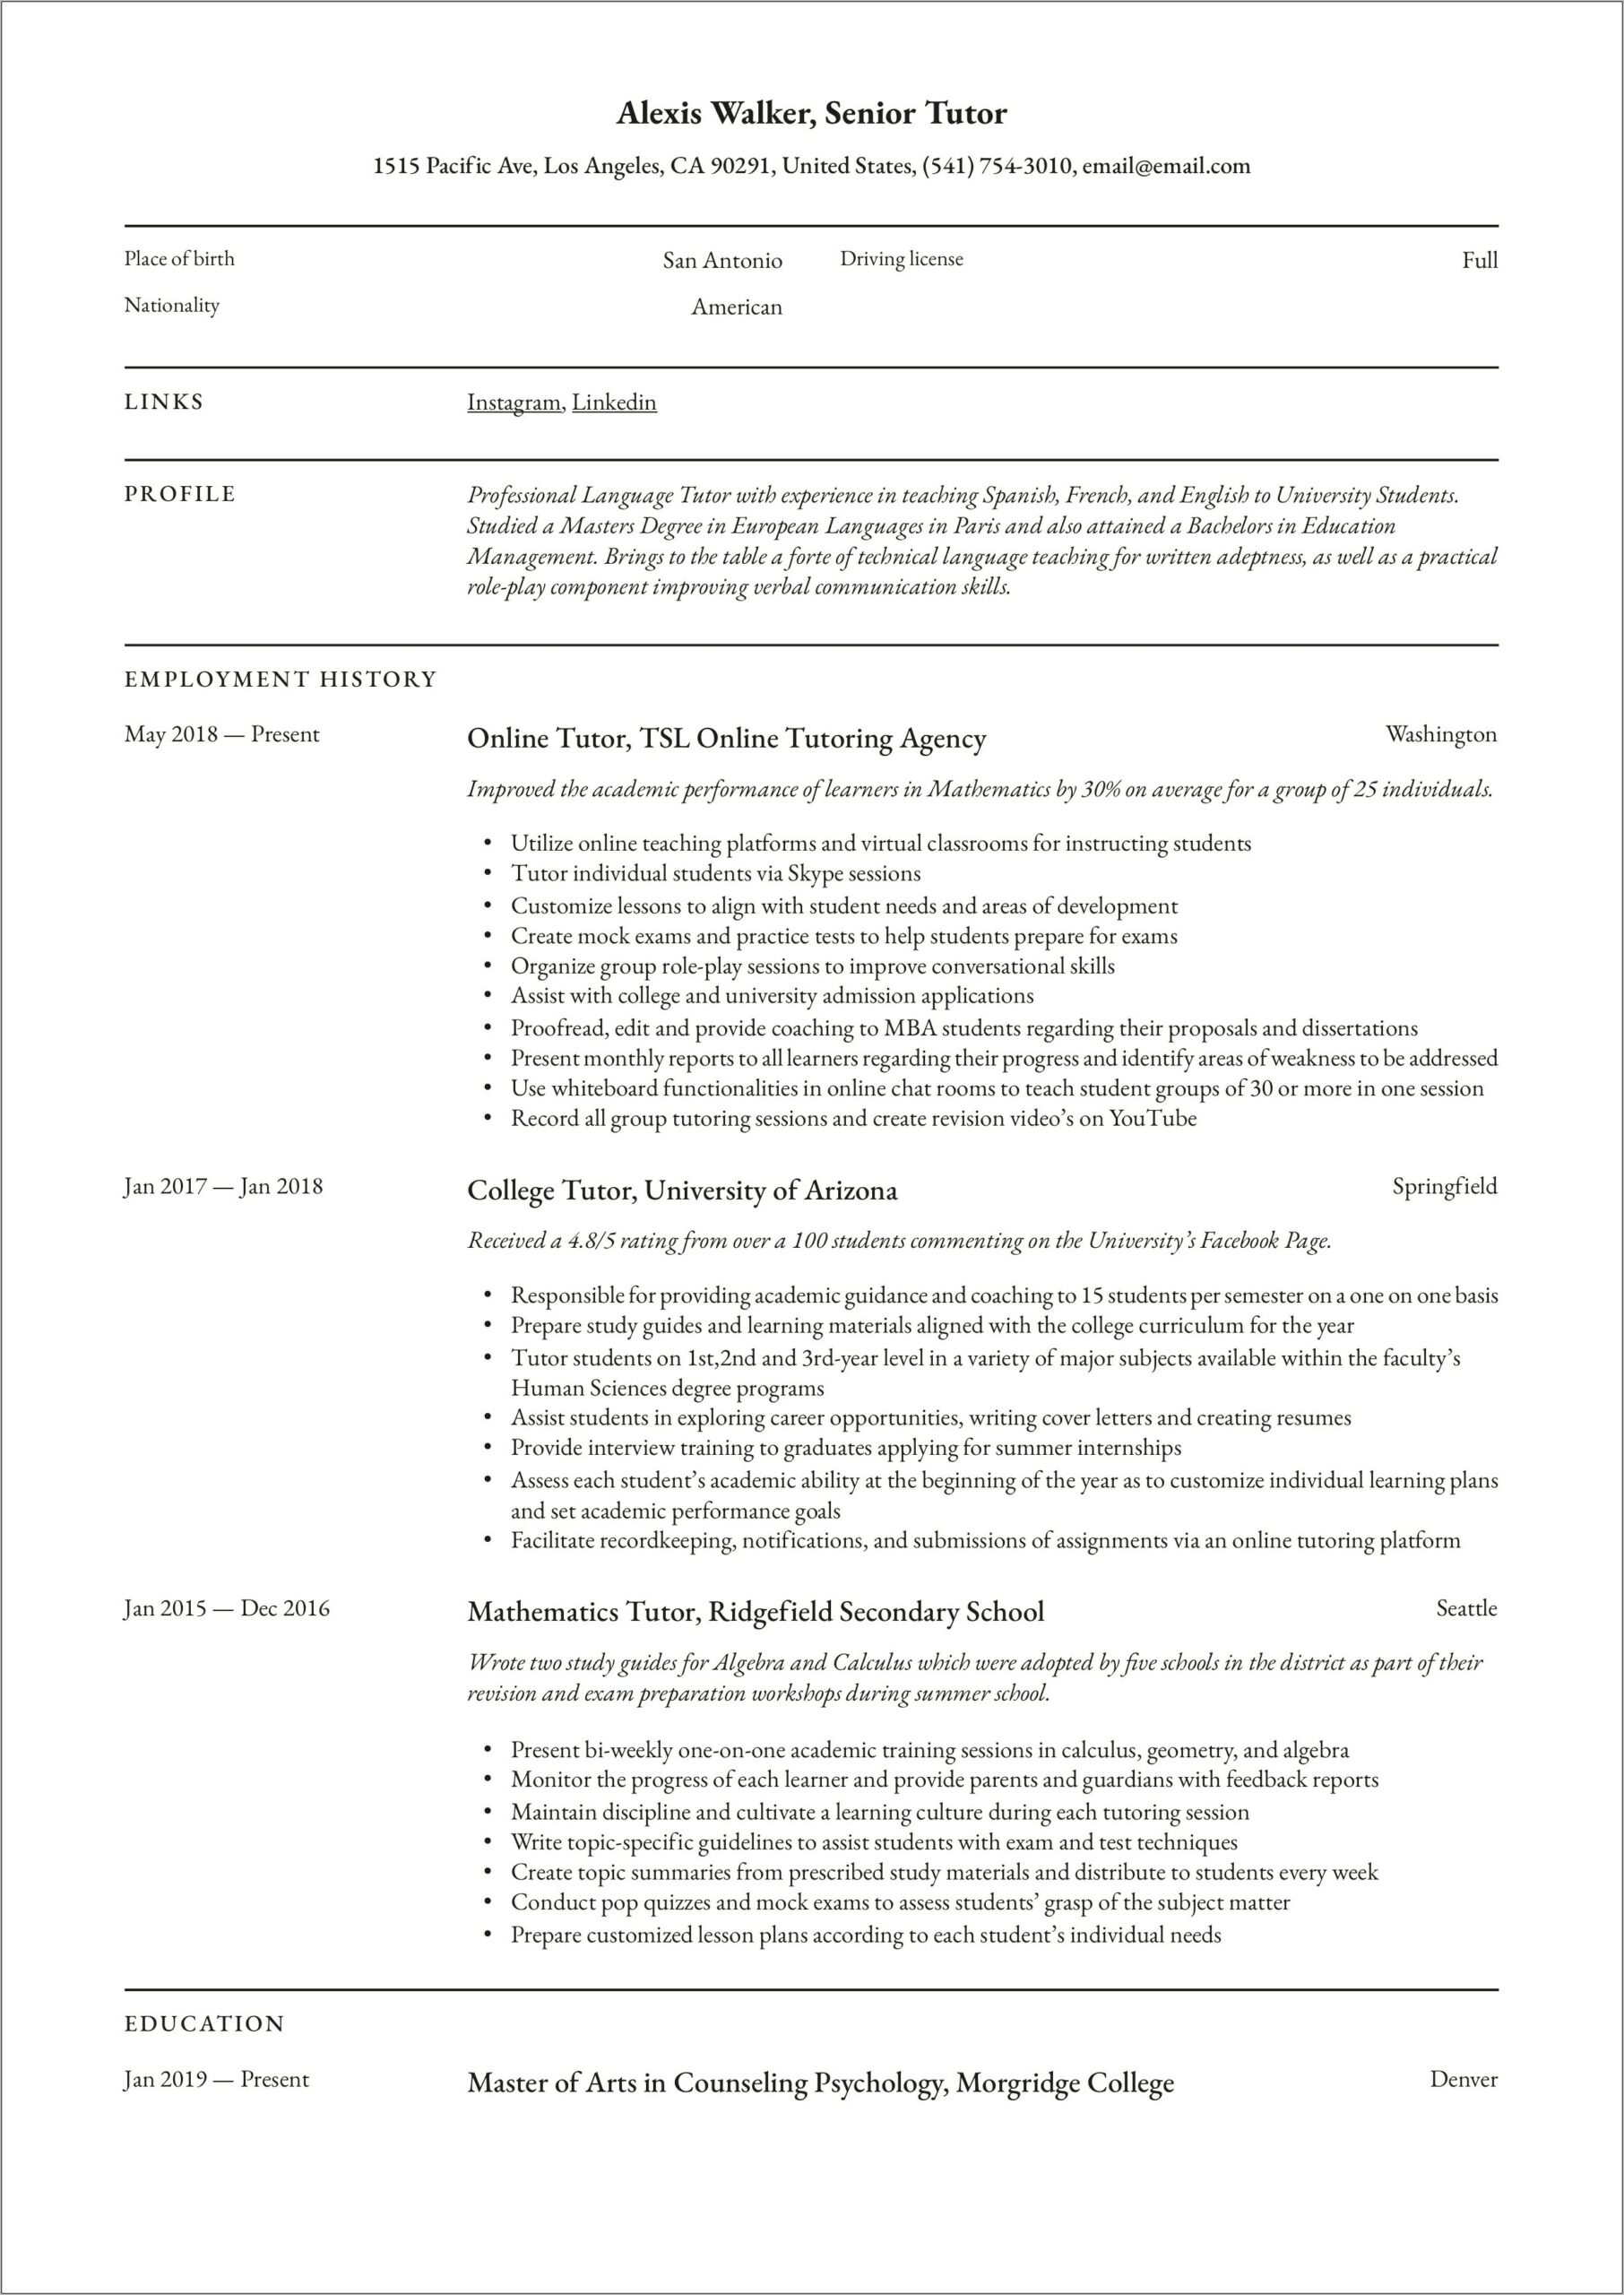 Job Description Of Tutor For Resume